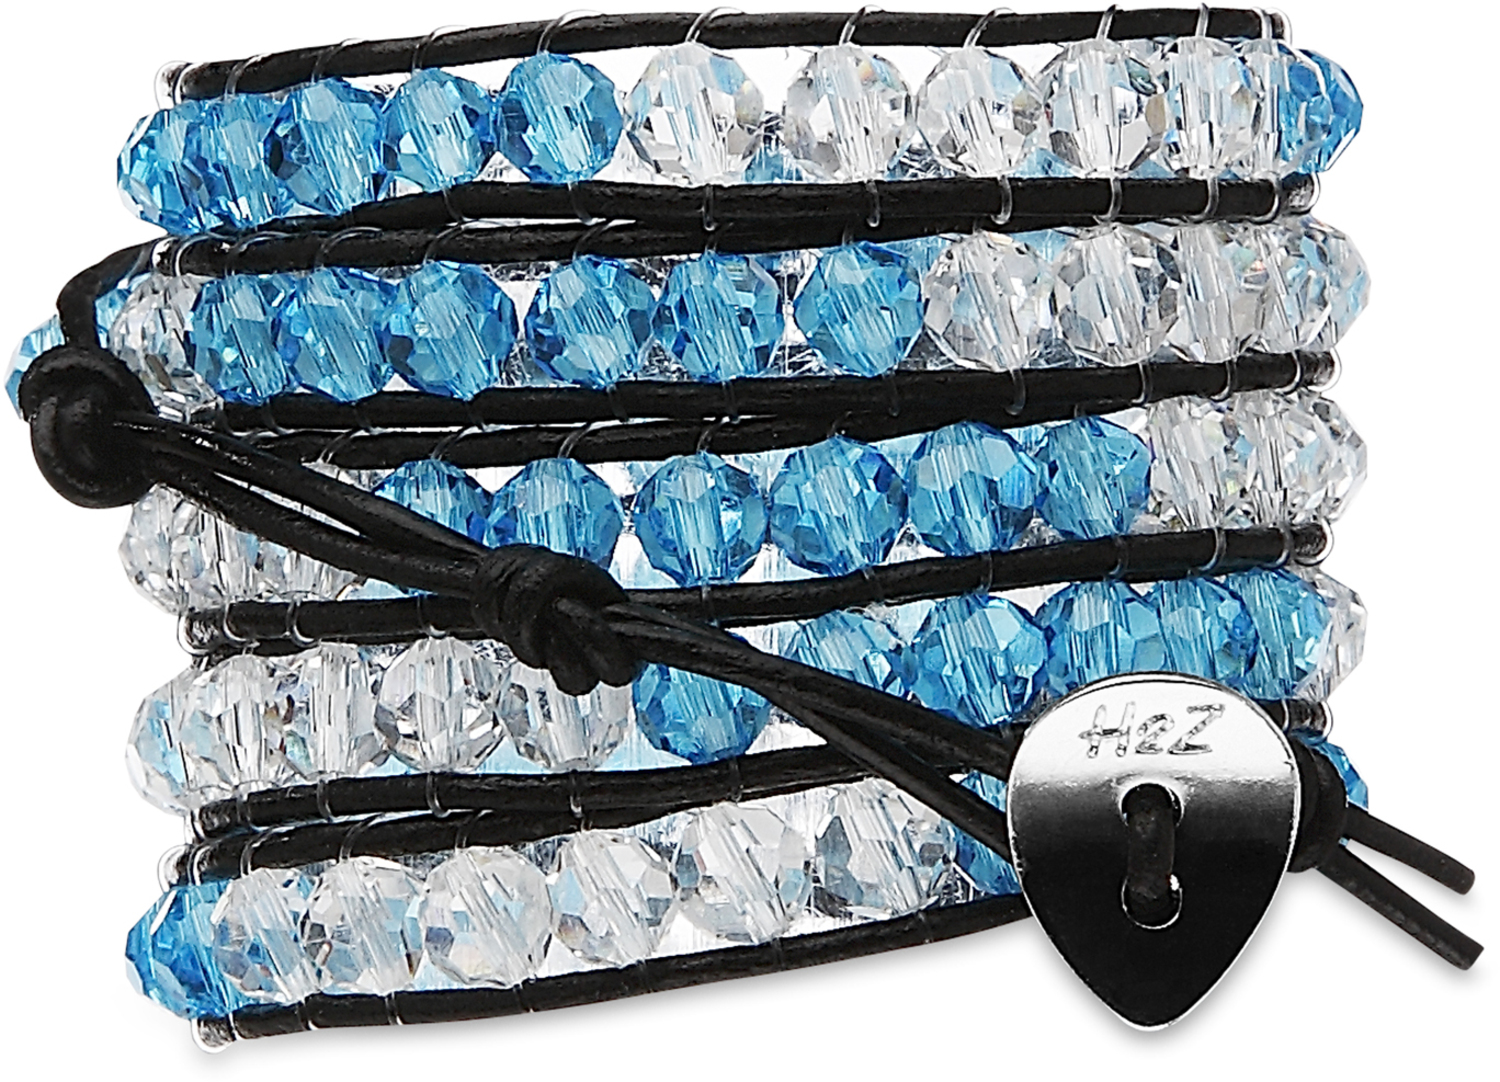 Ocean Side-Cyan & Clr Glass by H2Z - Wrap Bracelets - Ocean Side-Cyan & Clr Glass - 35 Inch Cyan and Clear Glass Beads w/ Black Leather Wrap Bracelet
